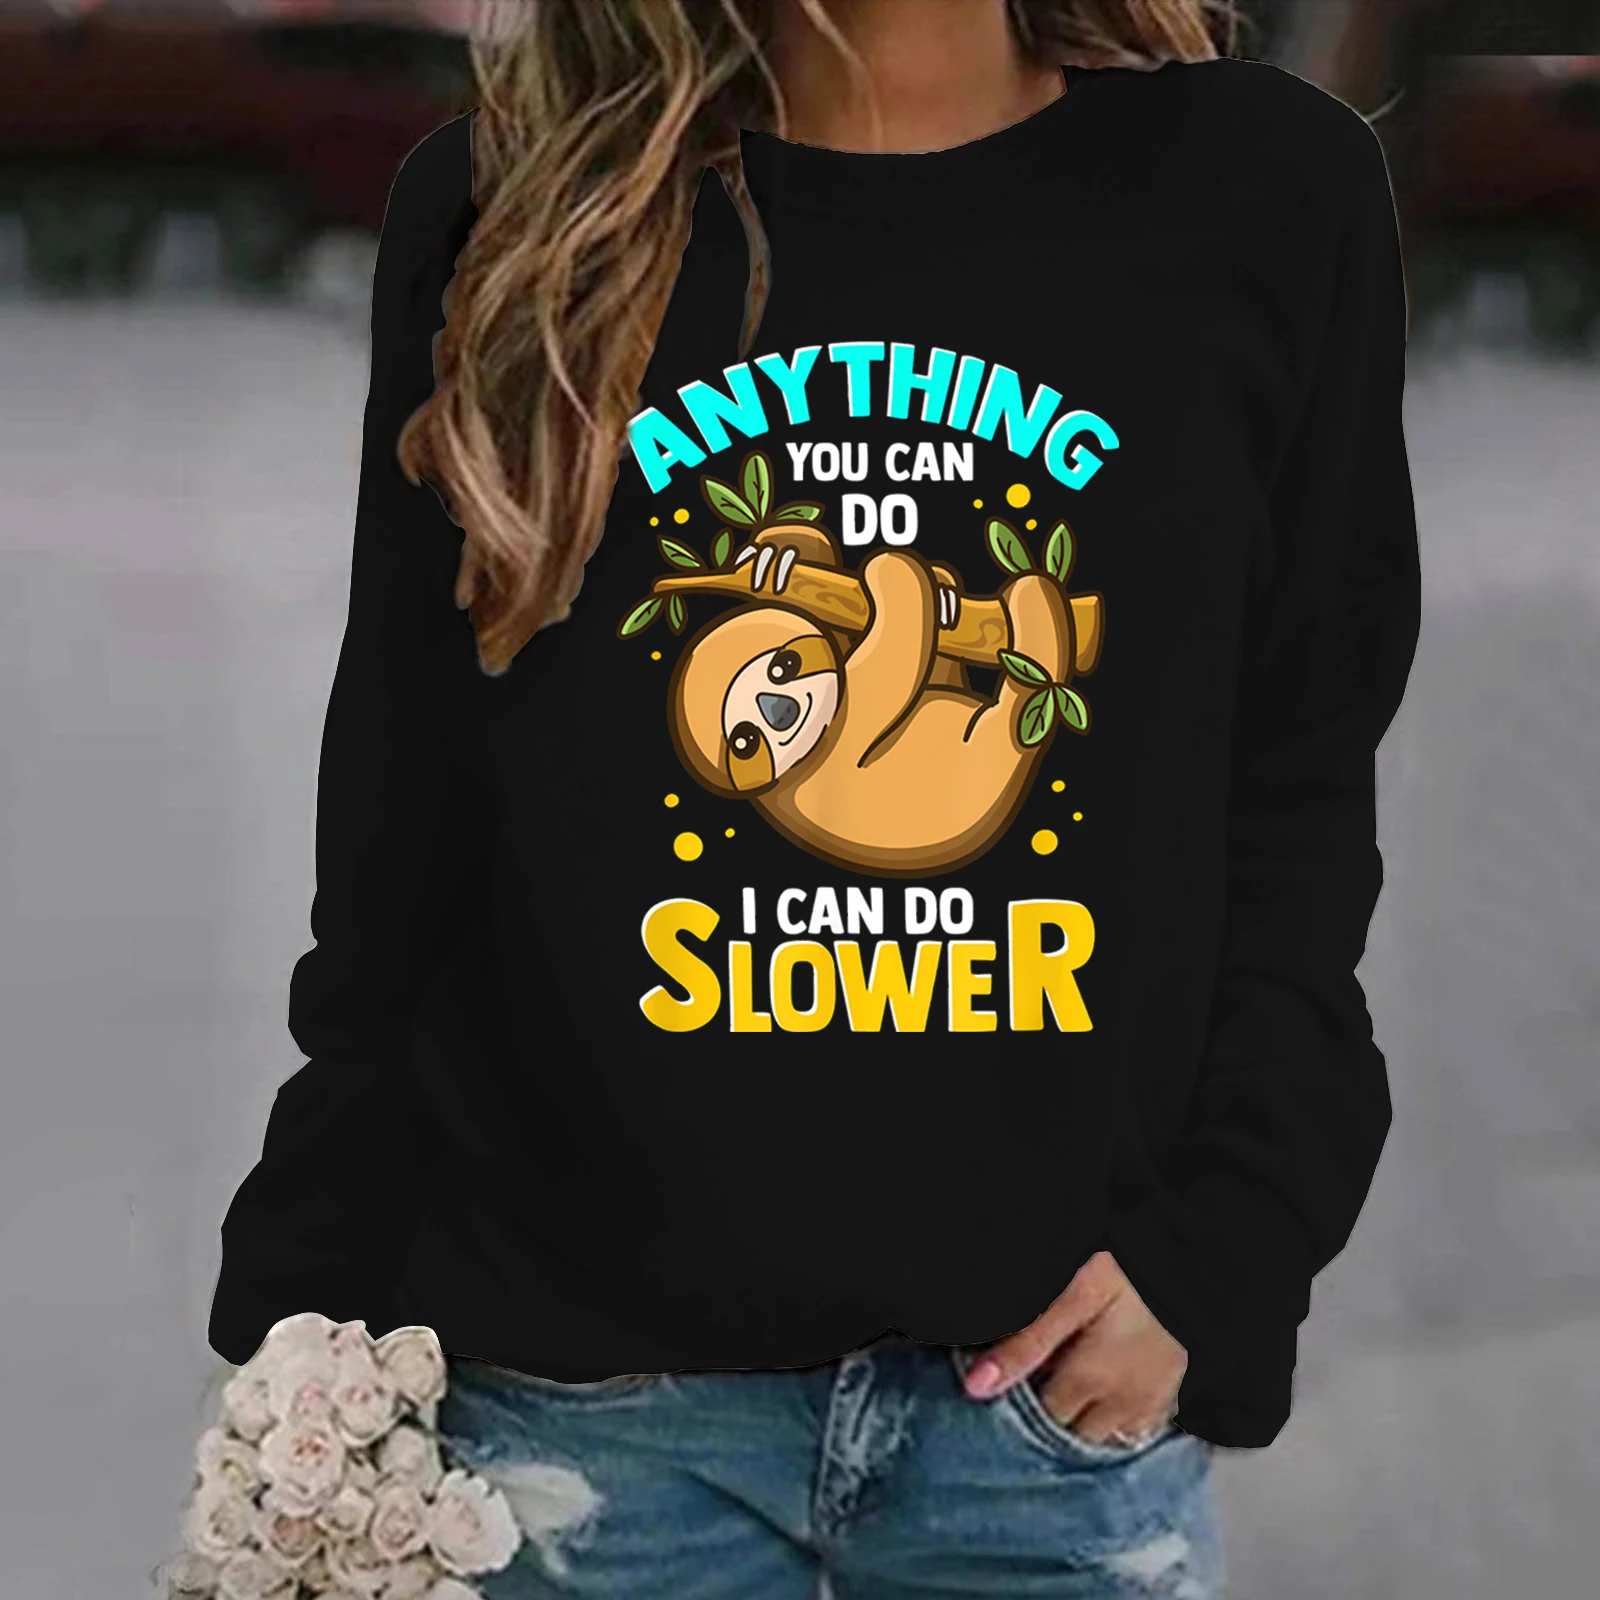 

Sportwear Anything Slower Print Hoodies Punk Pullover Funny Sweatshirt Teenager Hoodies Kpop Clothes Tops Sloth Cartoon Top